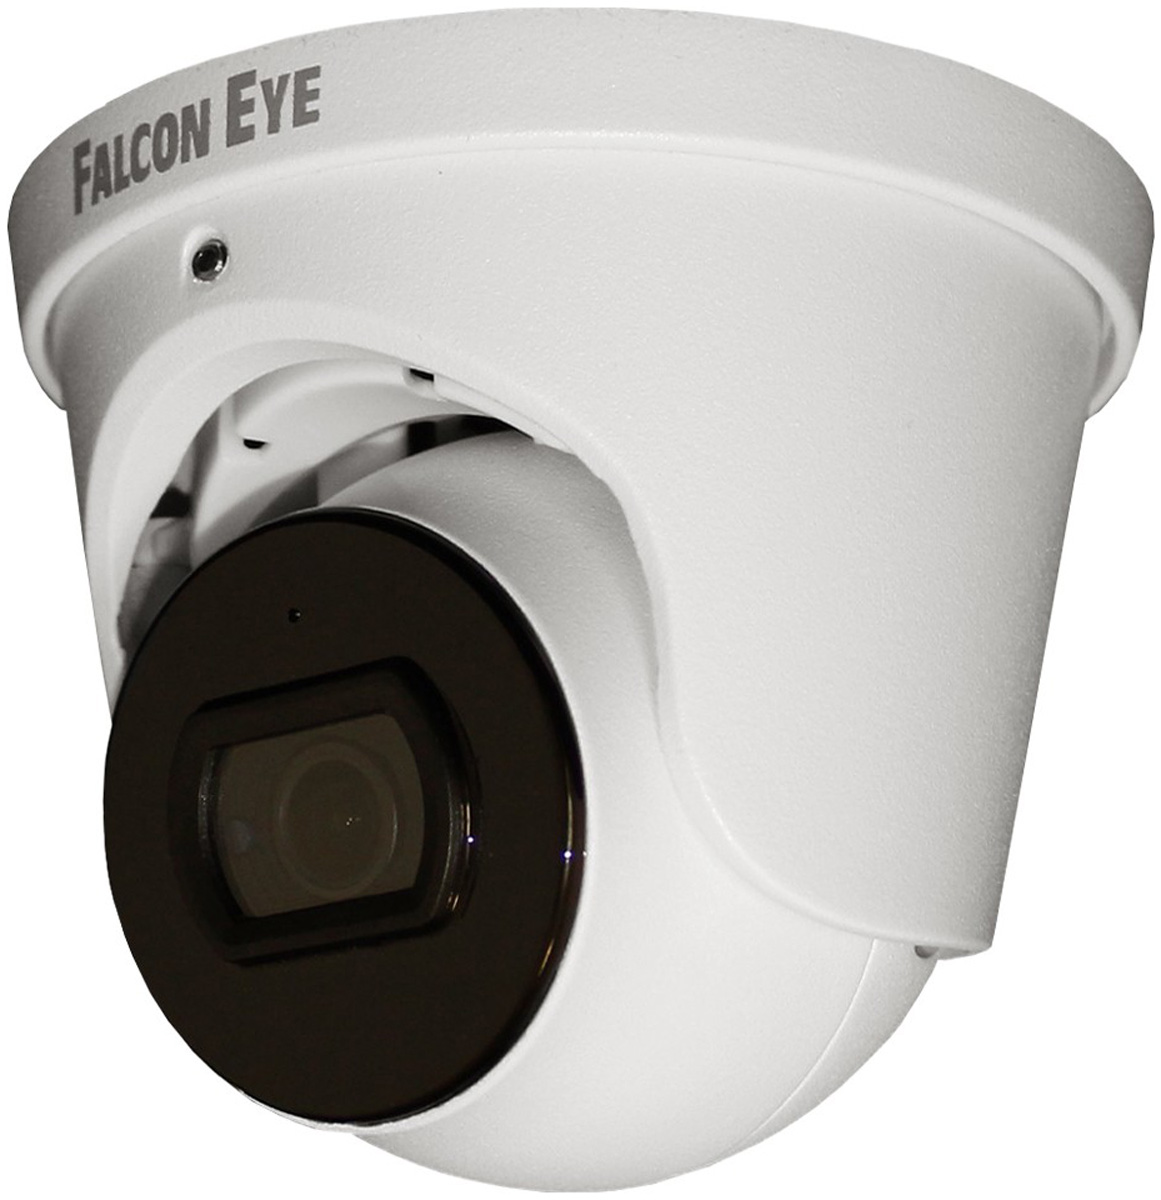 Видеокамера Falcon Eye FE-MHD-D2-25 видеодомофон tantos sherlock vizit tft lcd 10 1 1024x768 pal ntsc hands free 3 панели 1 вход камеры 1 вход адаптирован под координатный или ци